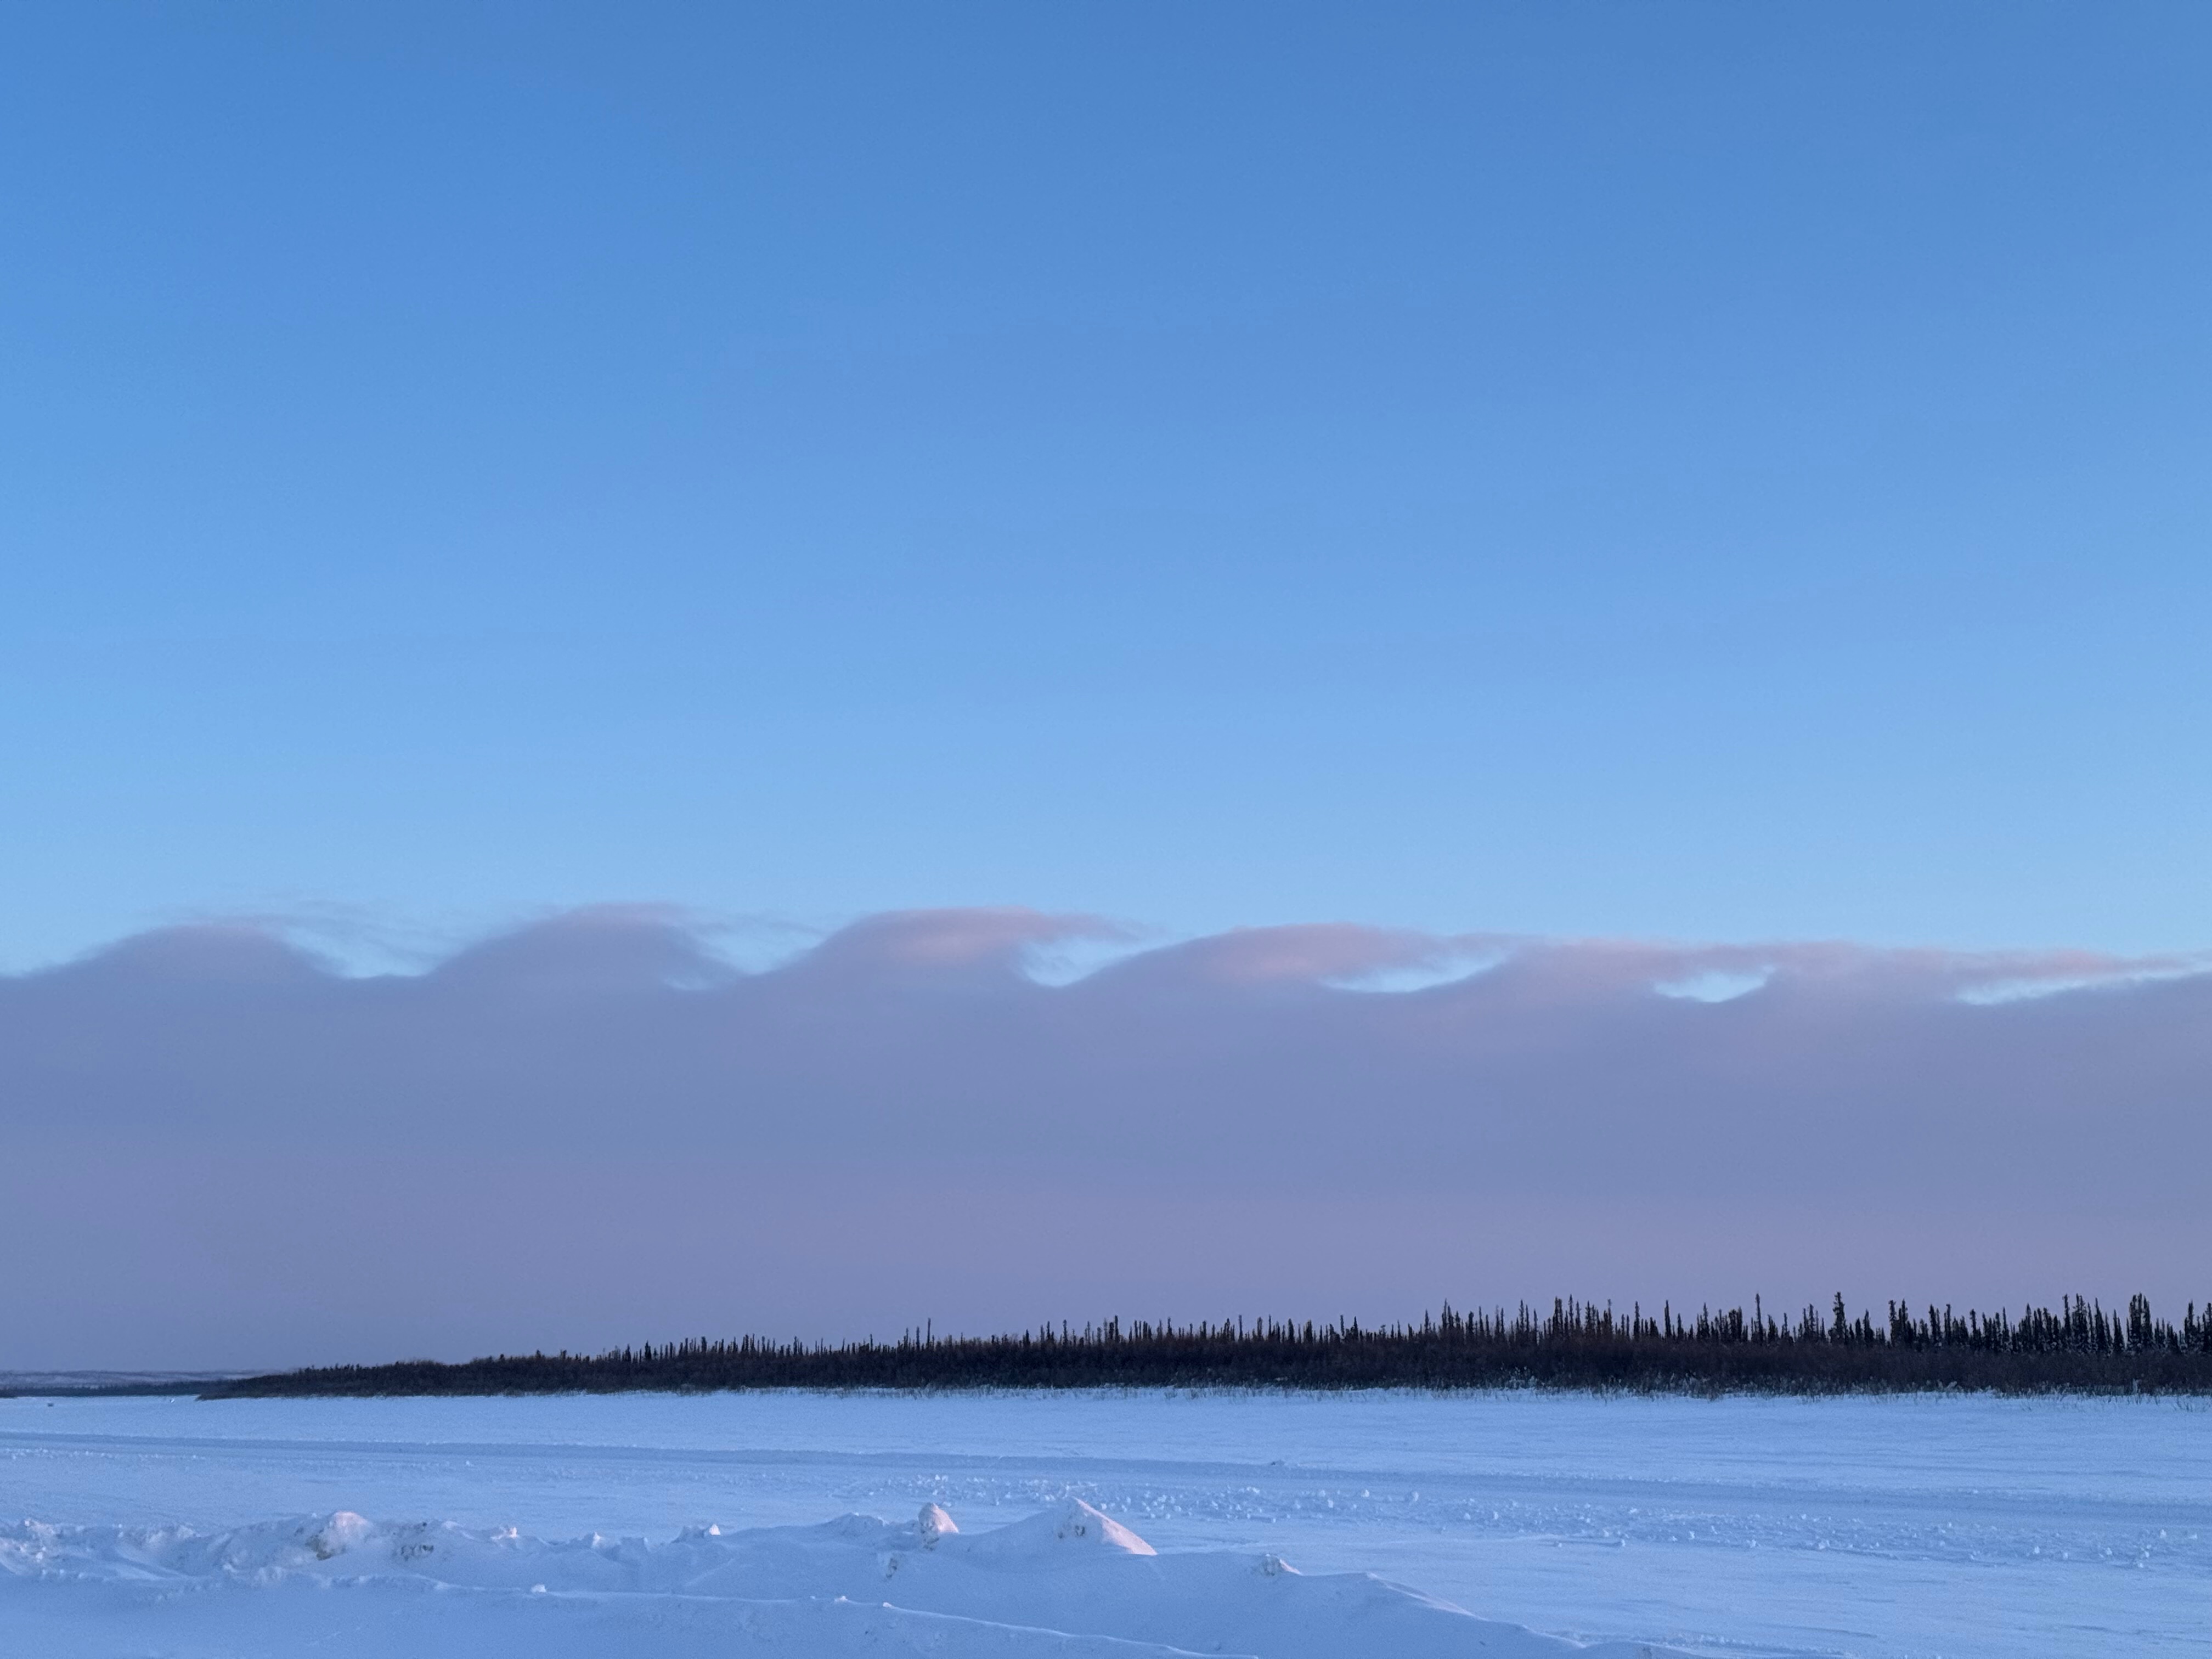 Community photo by Maureen Israel | Inuvik, Northwest Territories Canada